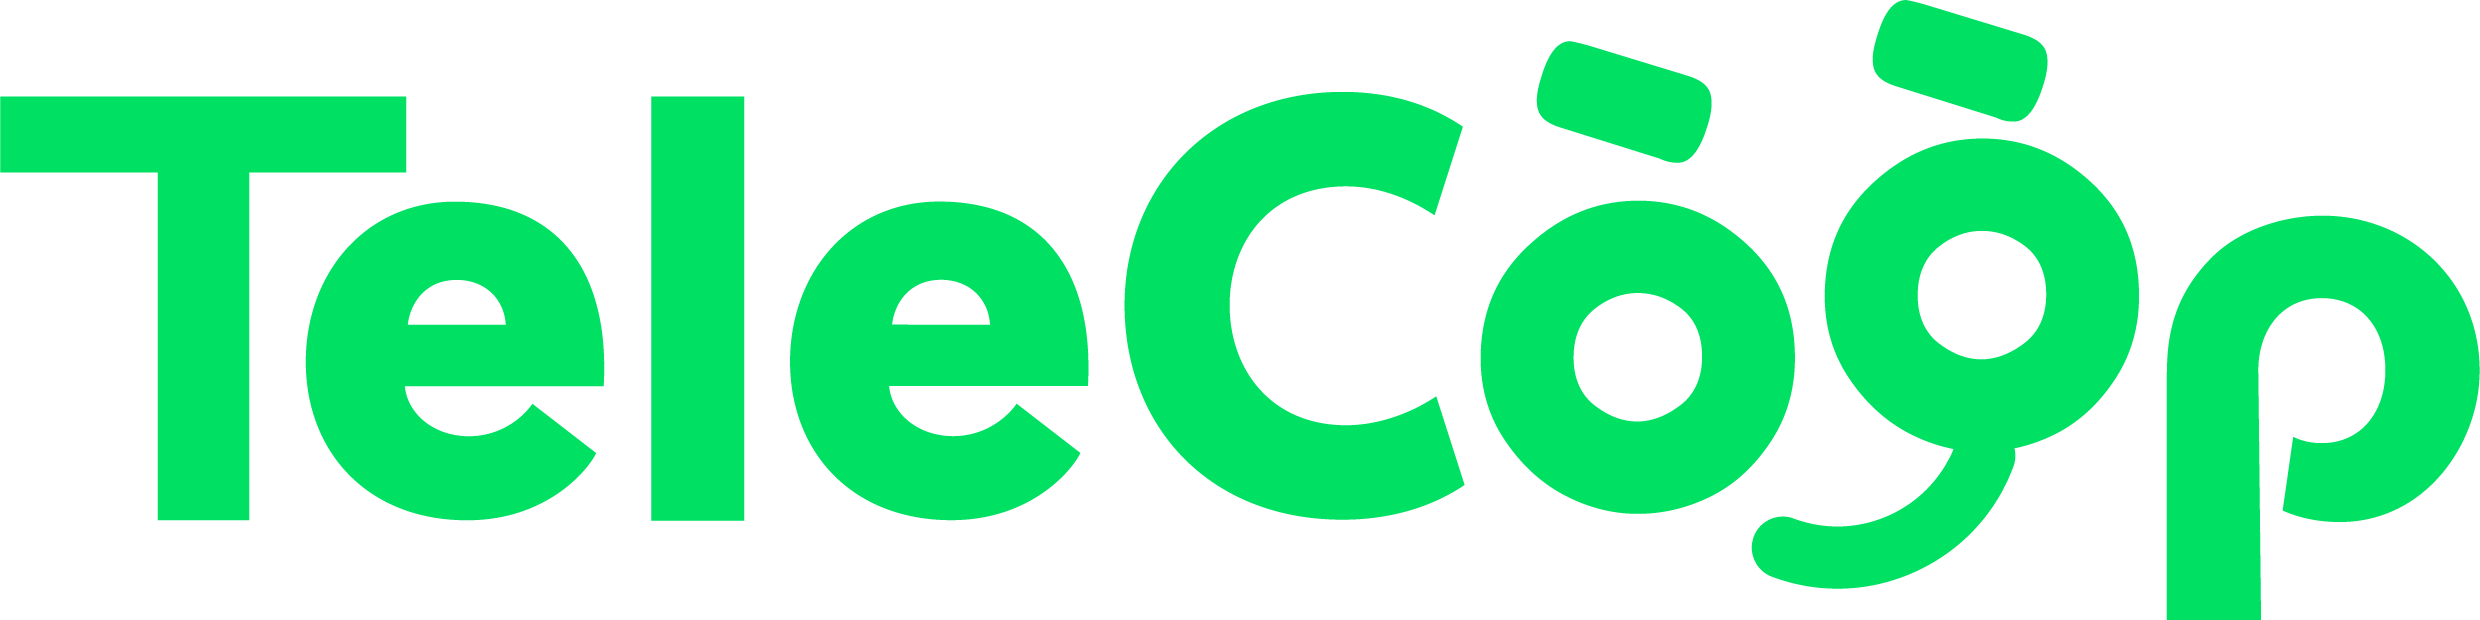 logo_telecoop